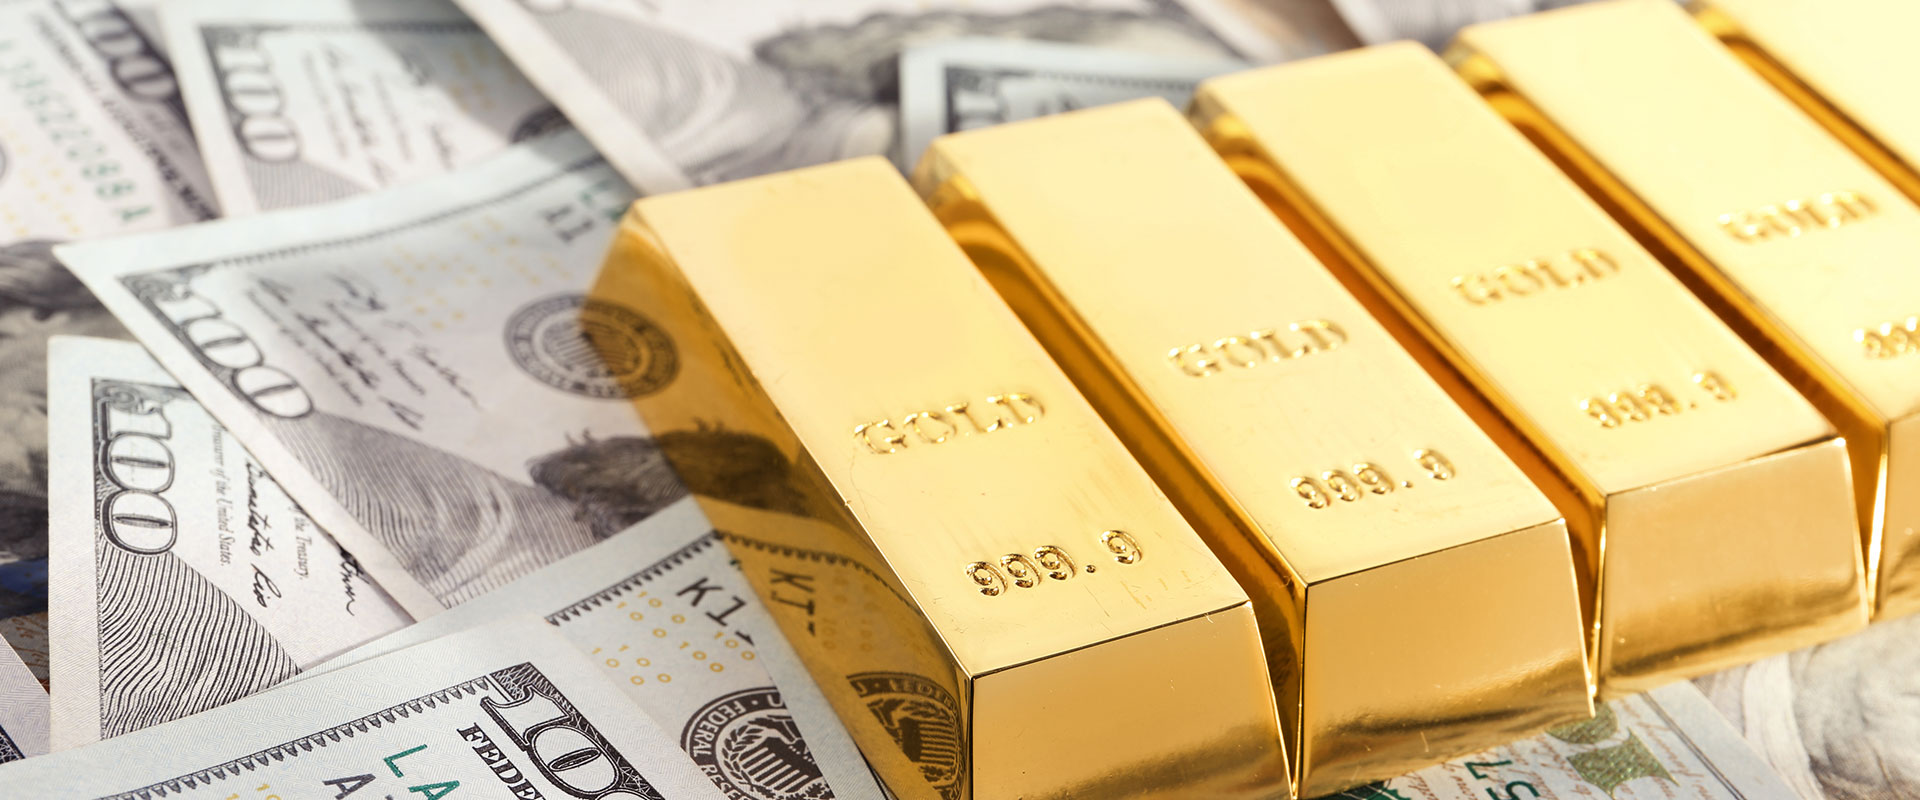 gold bars on pile of dollar bills